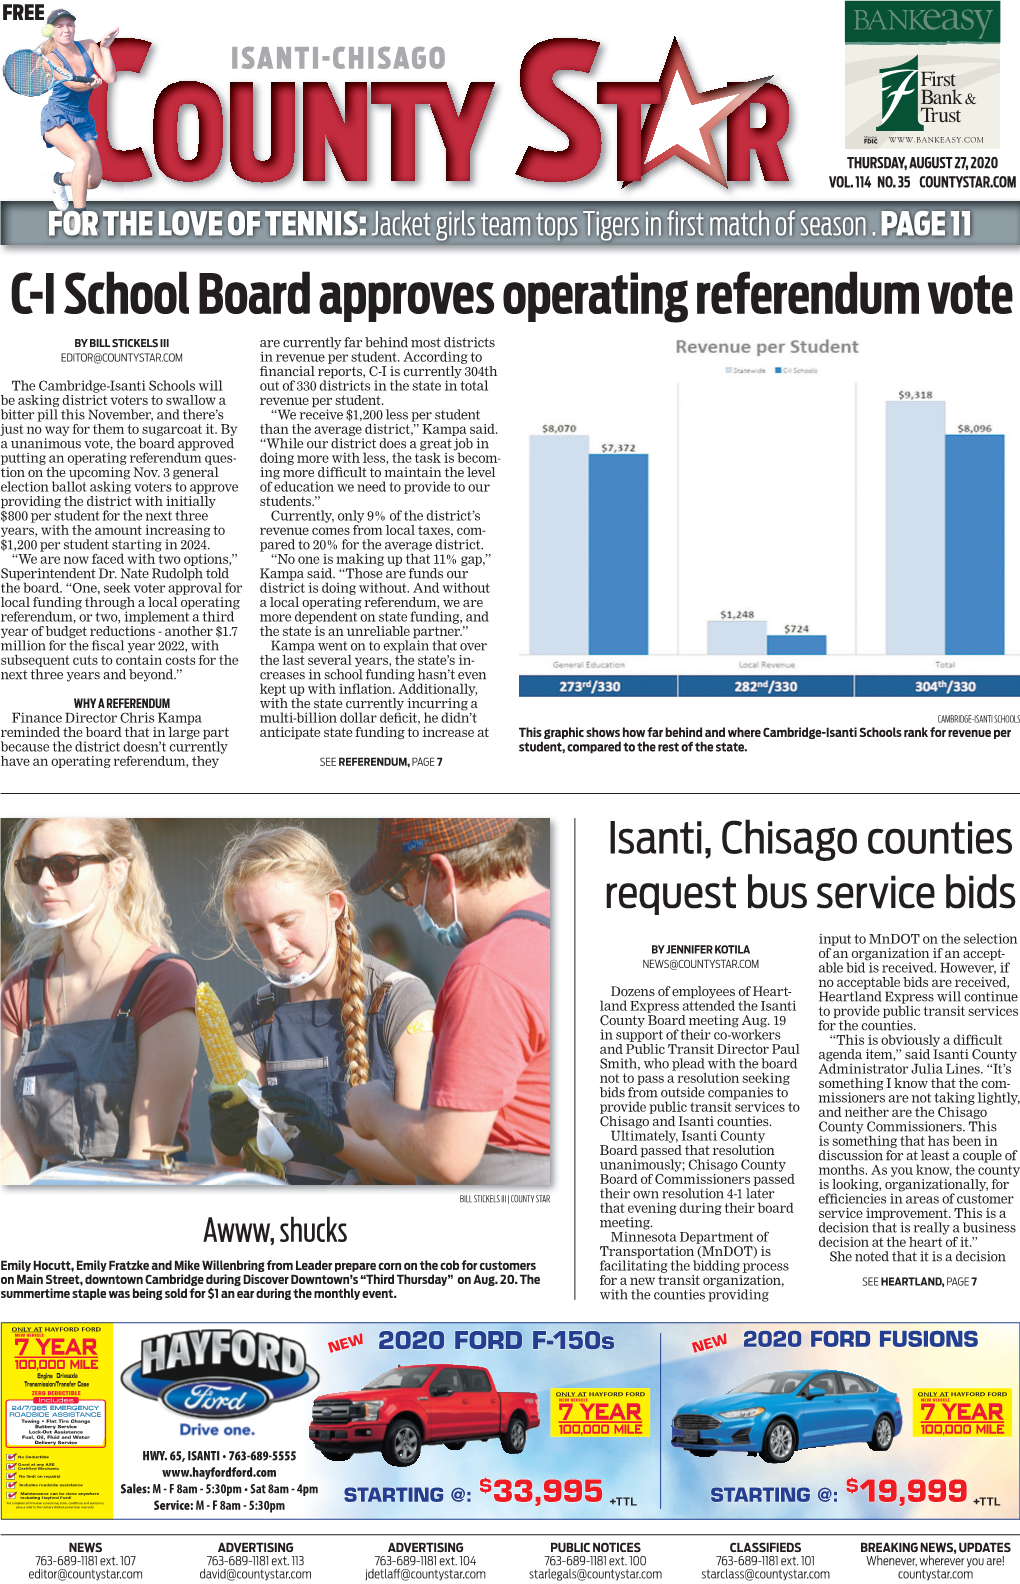 C-I School Board Approves Operating Referendum Vote